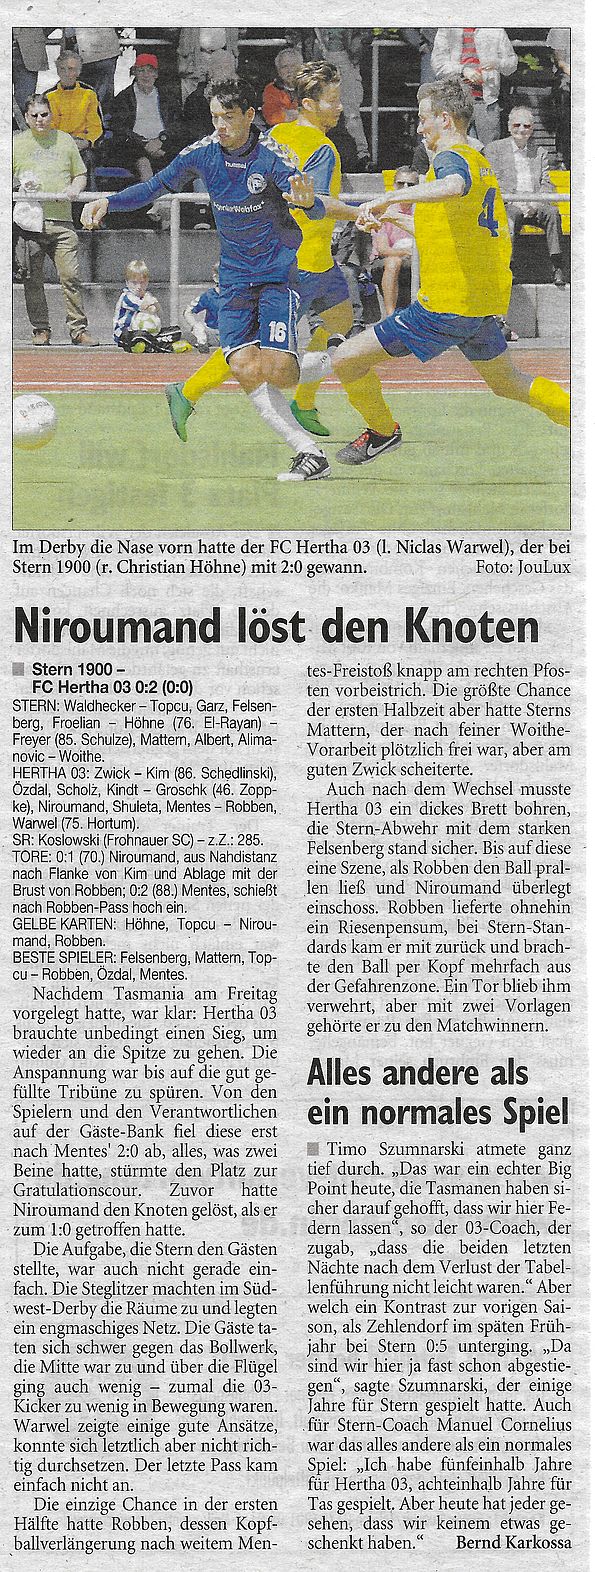 Motor Eberswalde Programm 1998/99 Hertha 03 Zehlendorf 